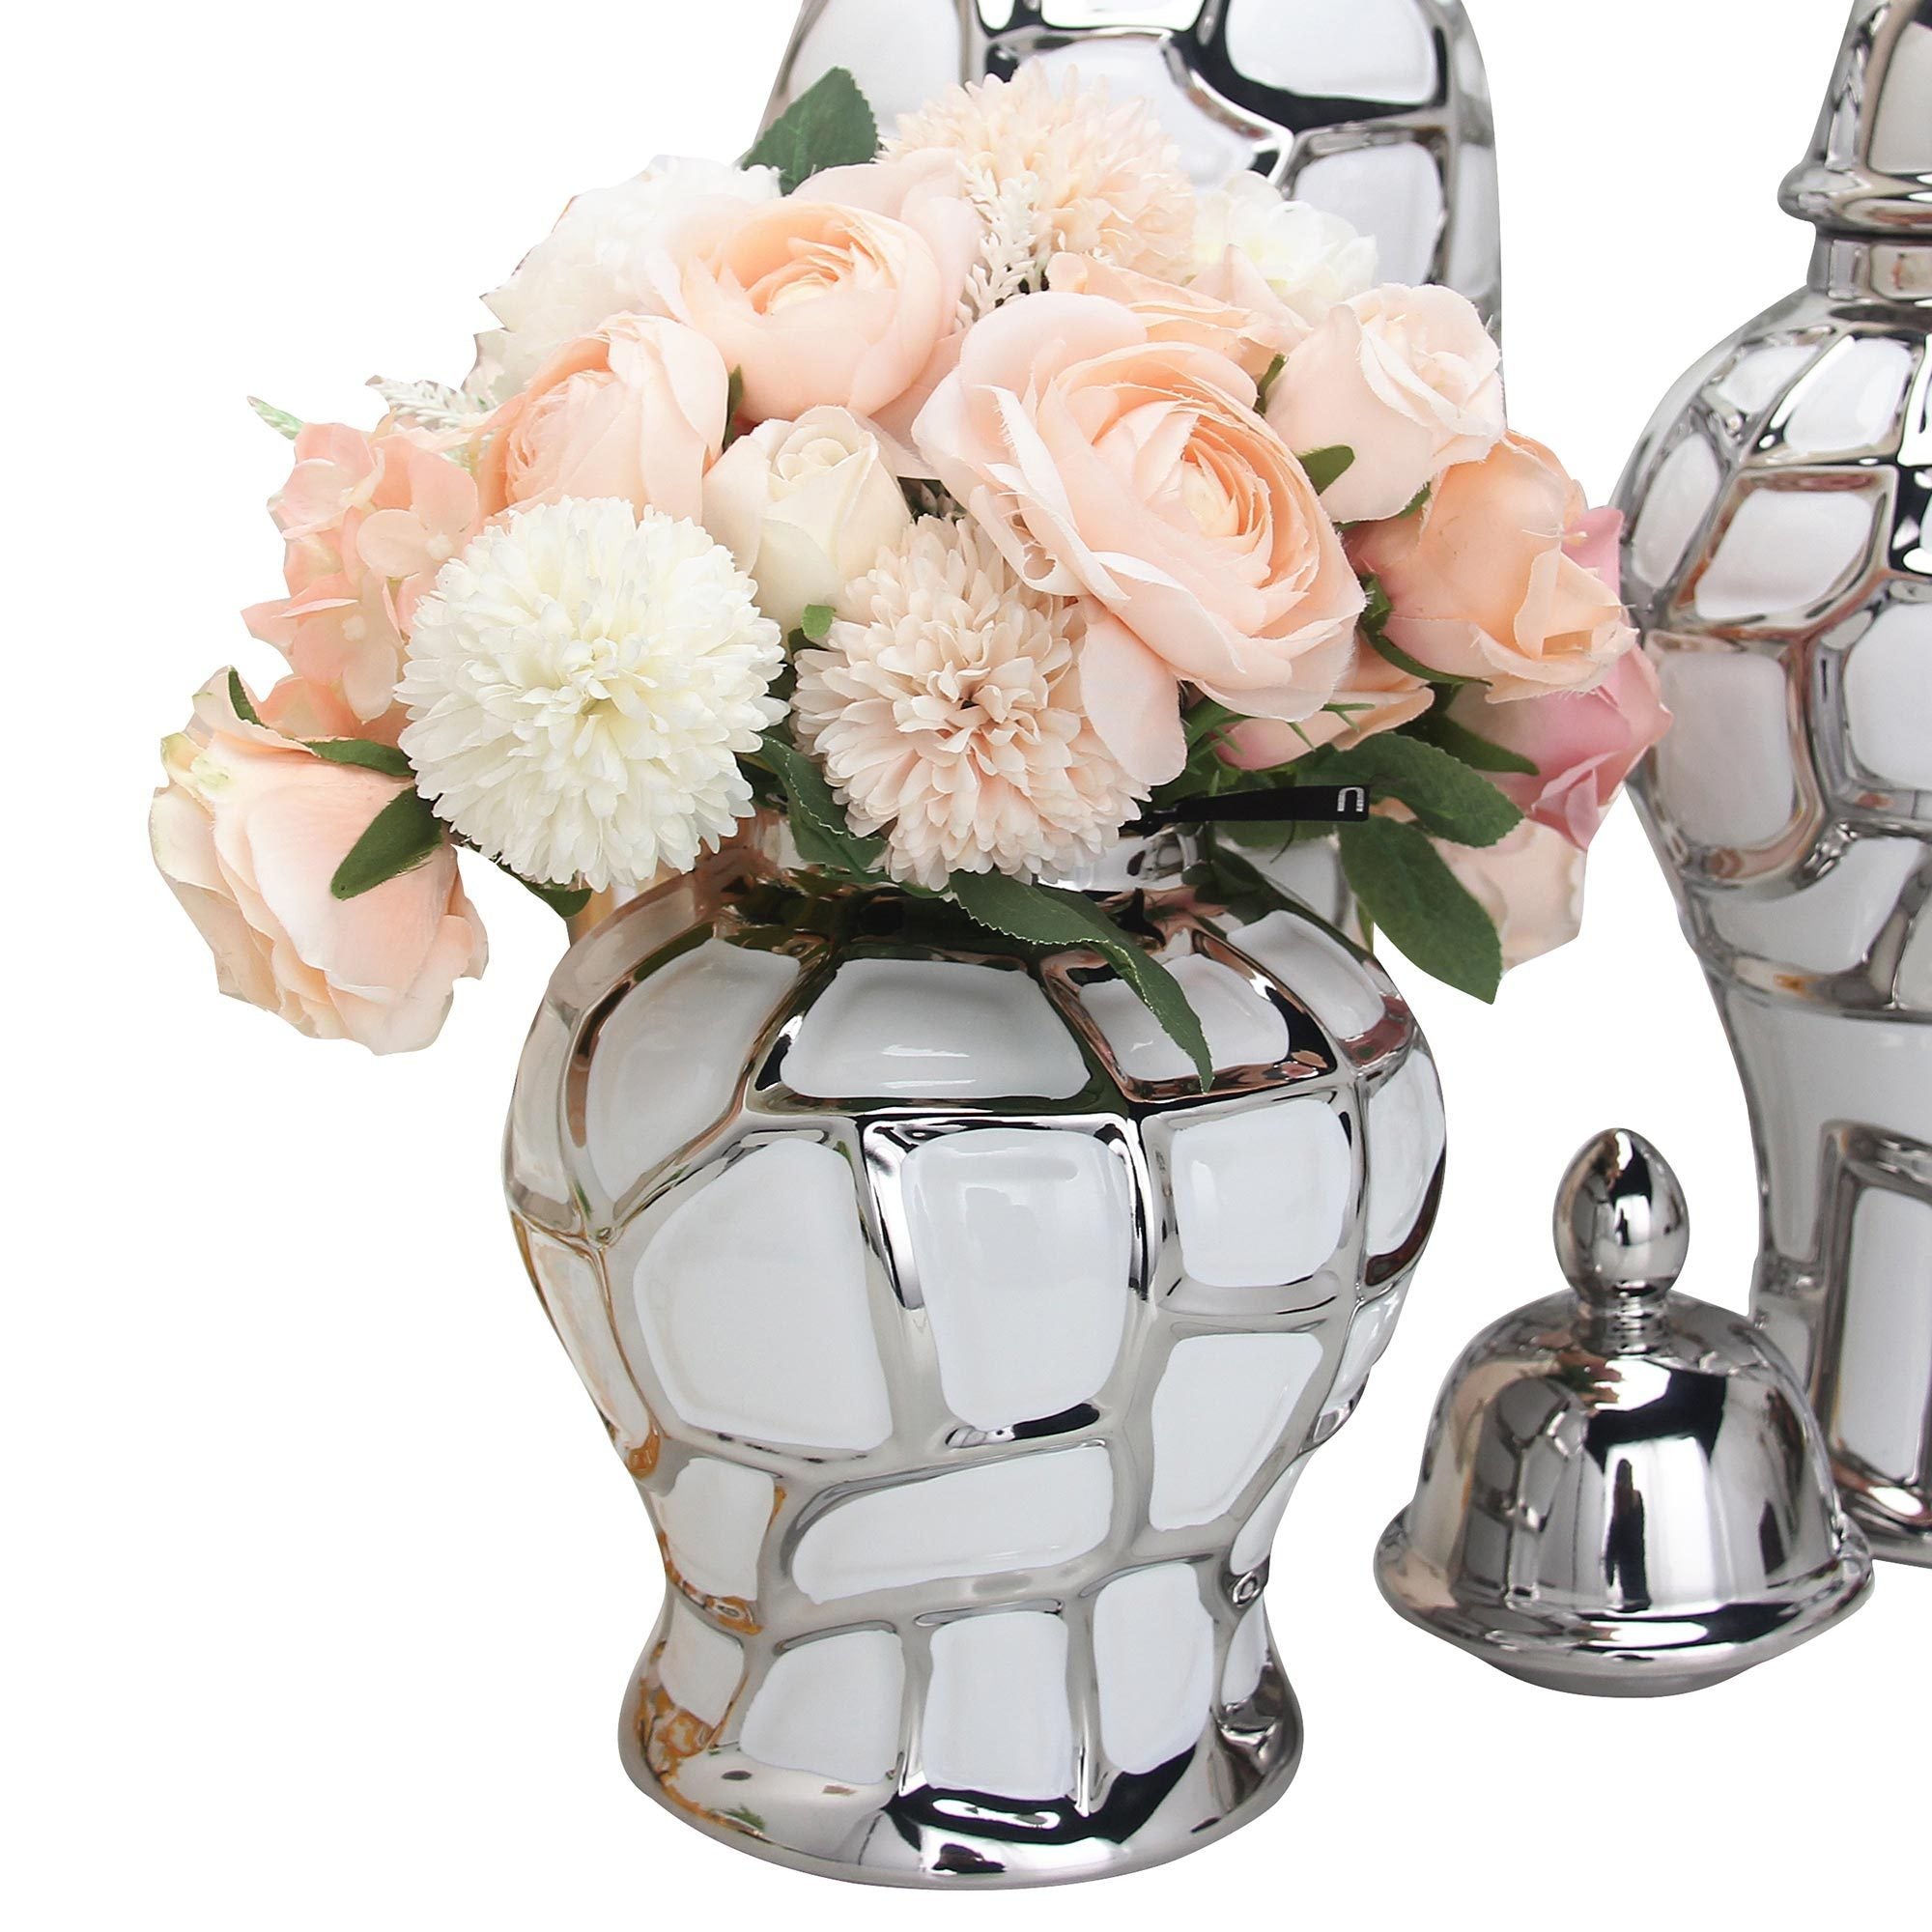 Regal White and Silver Ceramic Decorative Ginger Jar